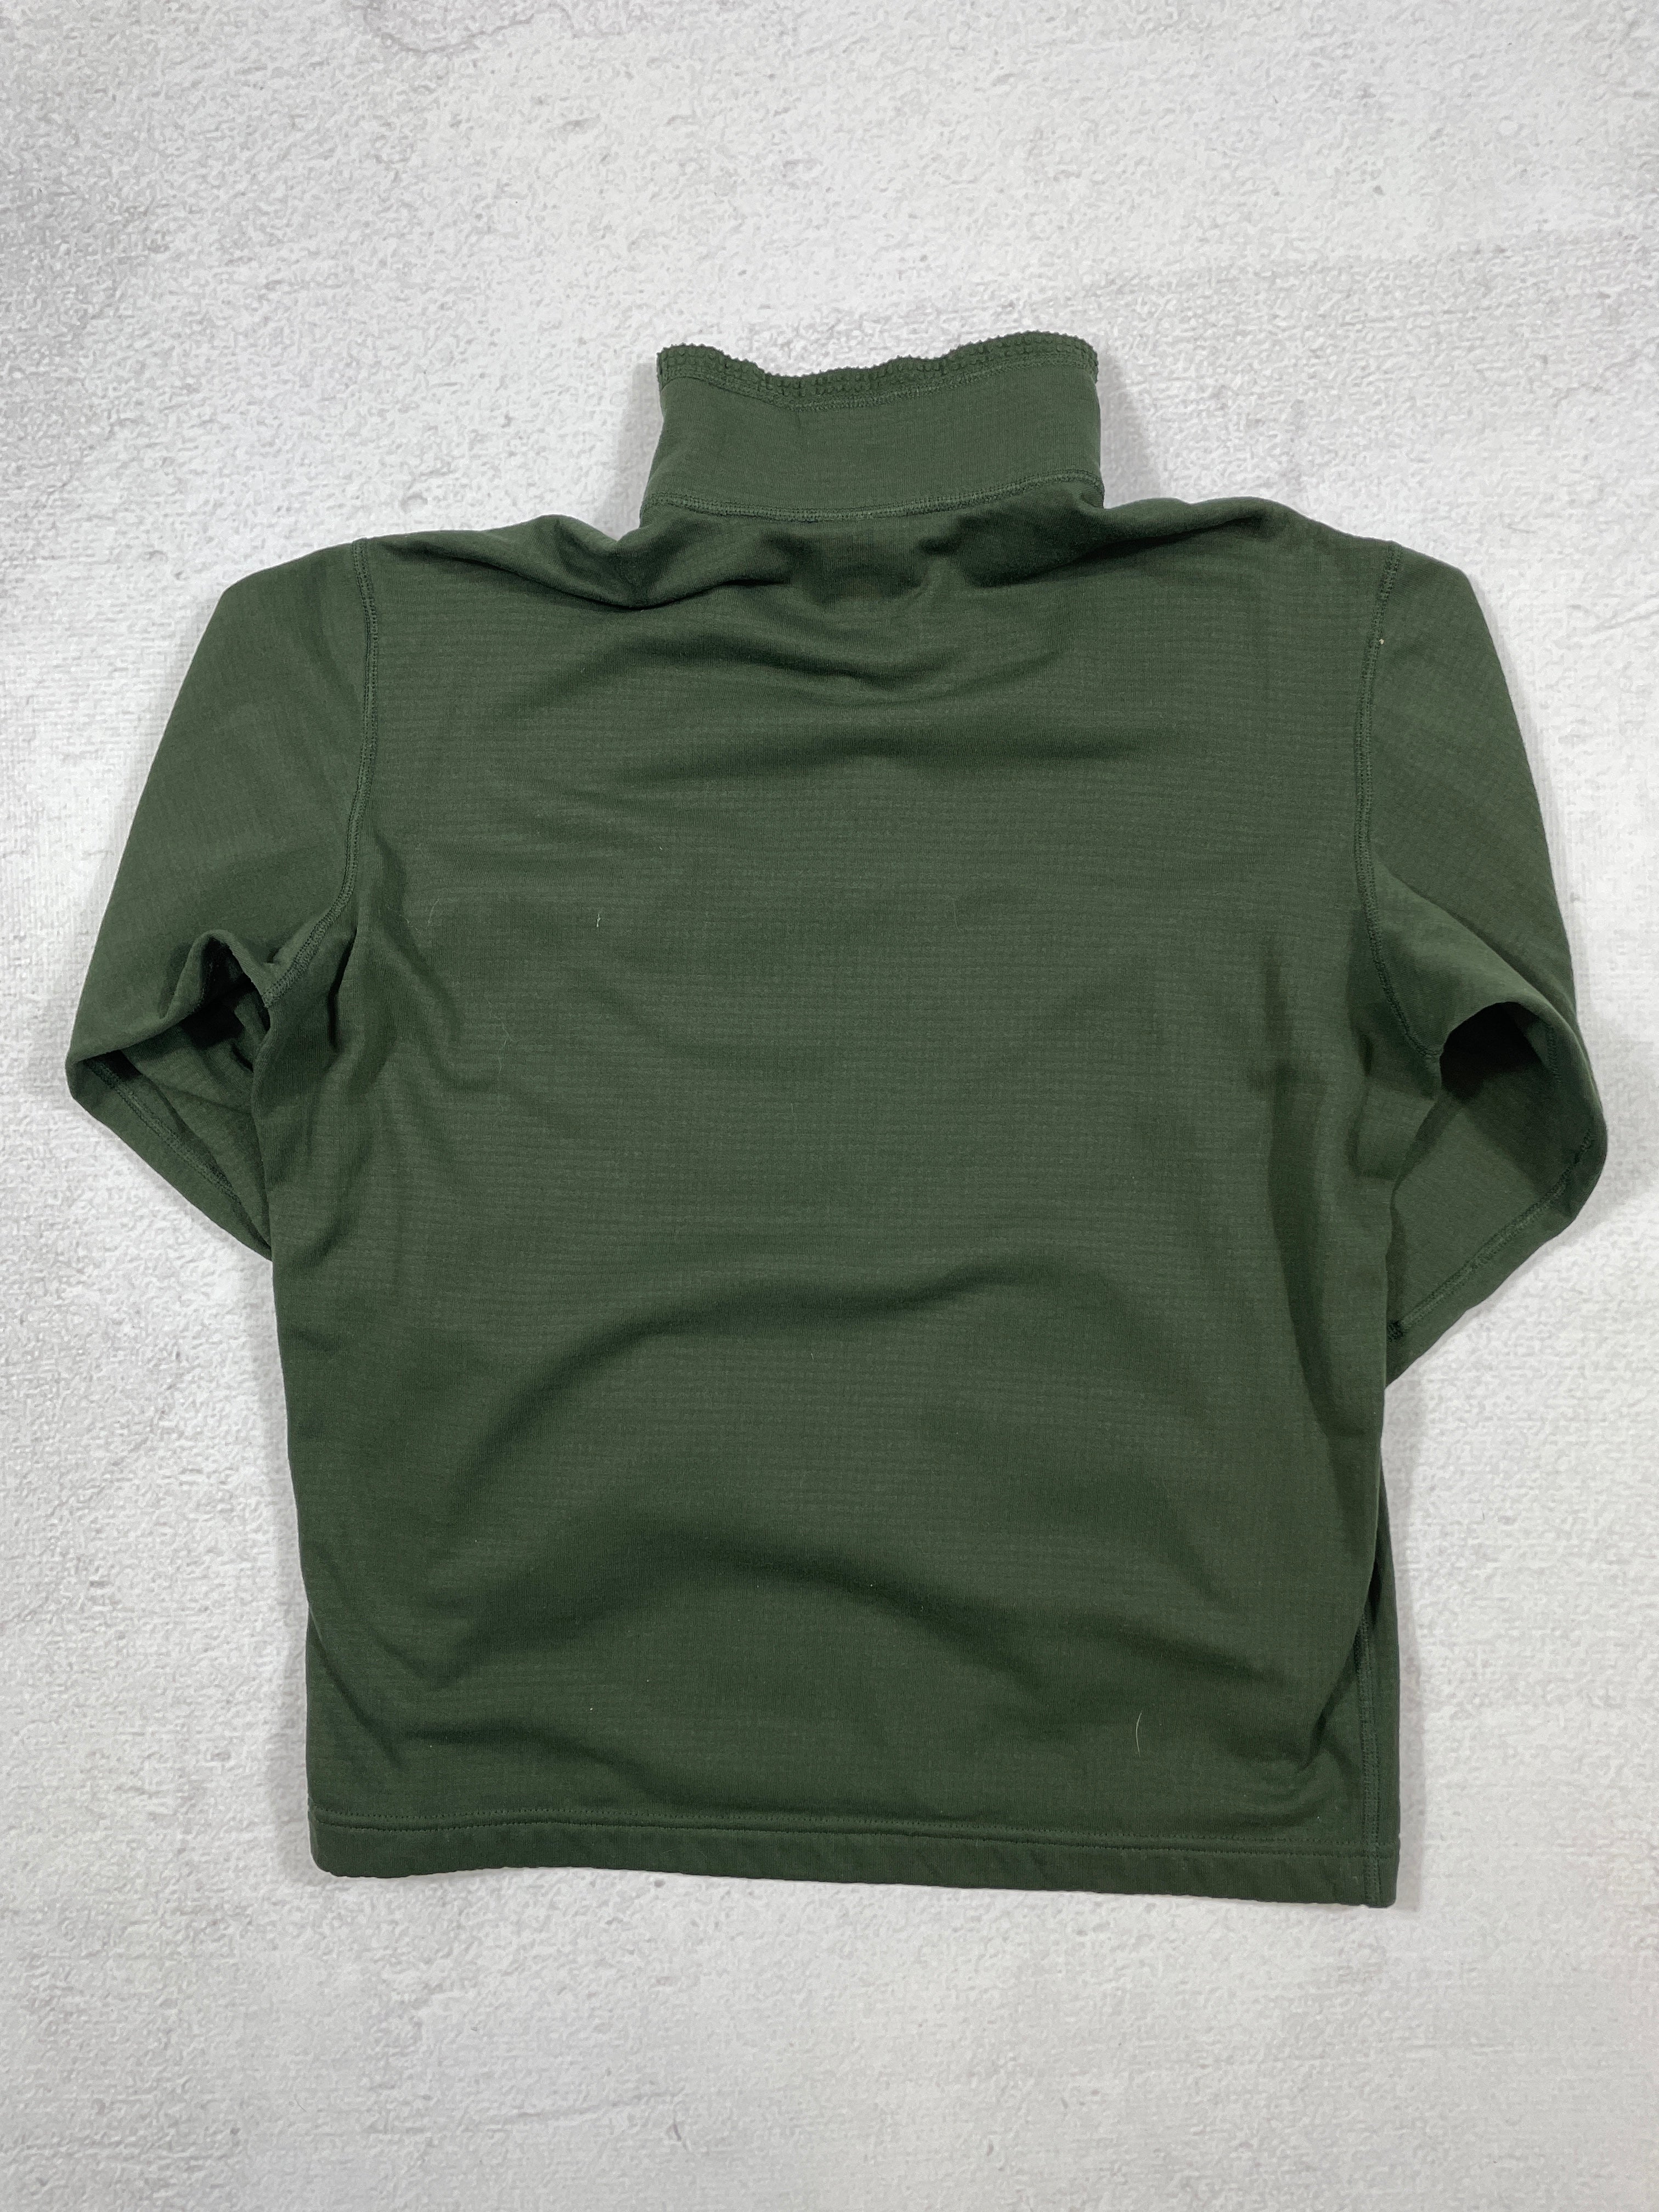 Vintage Patagonia 1/4 Zip Sweatshirt - Men's Medium